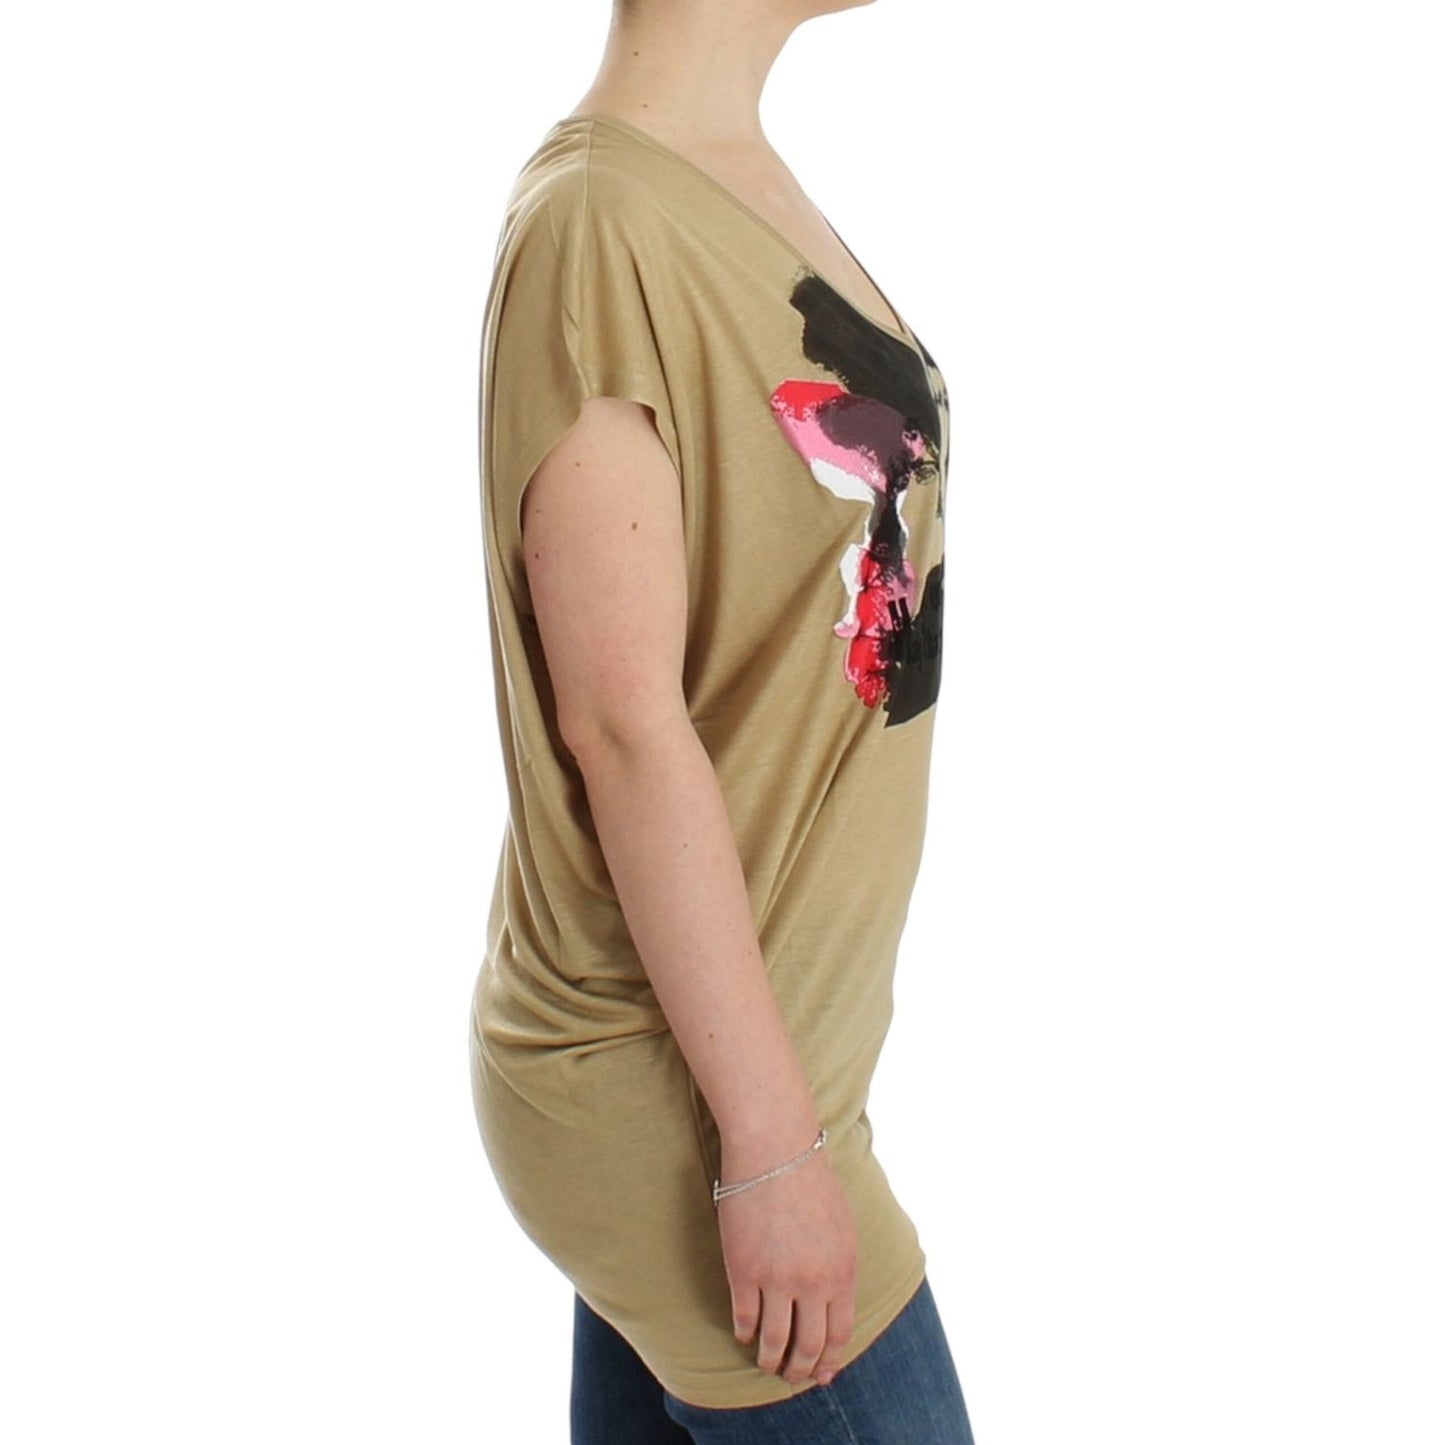 Costume National Chic V-Neck Tunic Top with Motive Print beige-motive-print-t-shirt